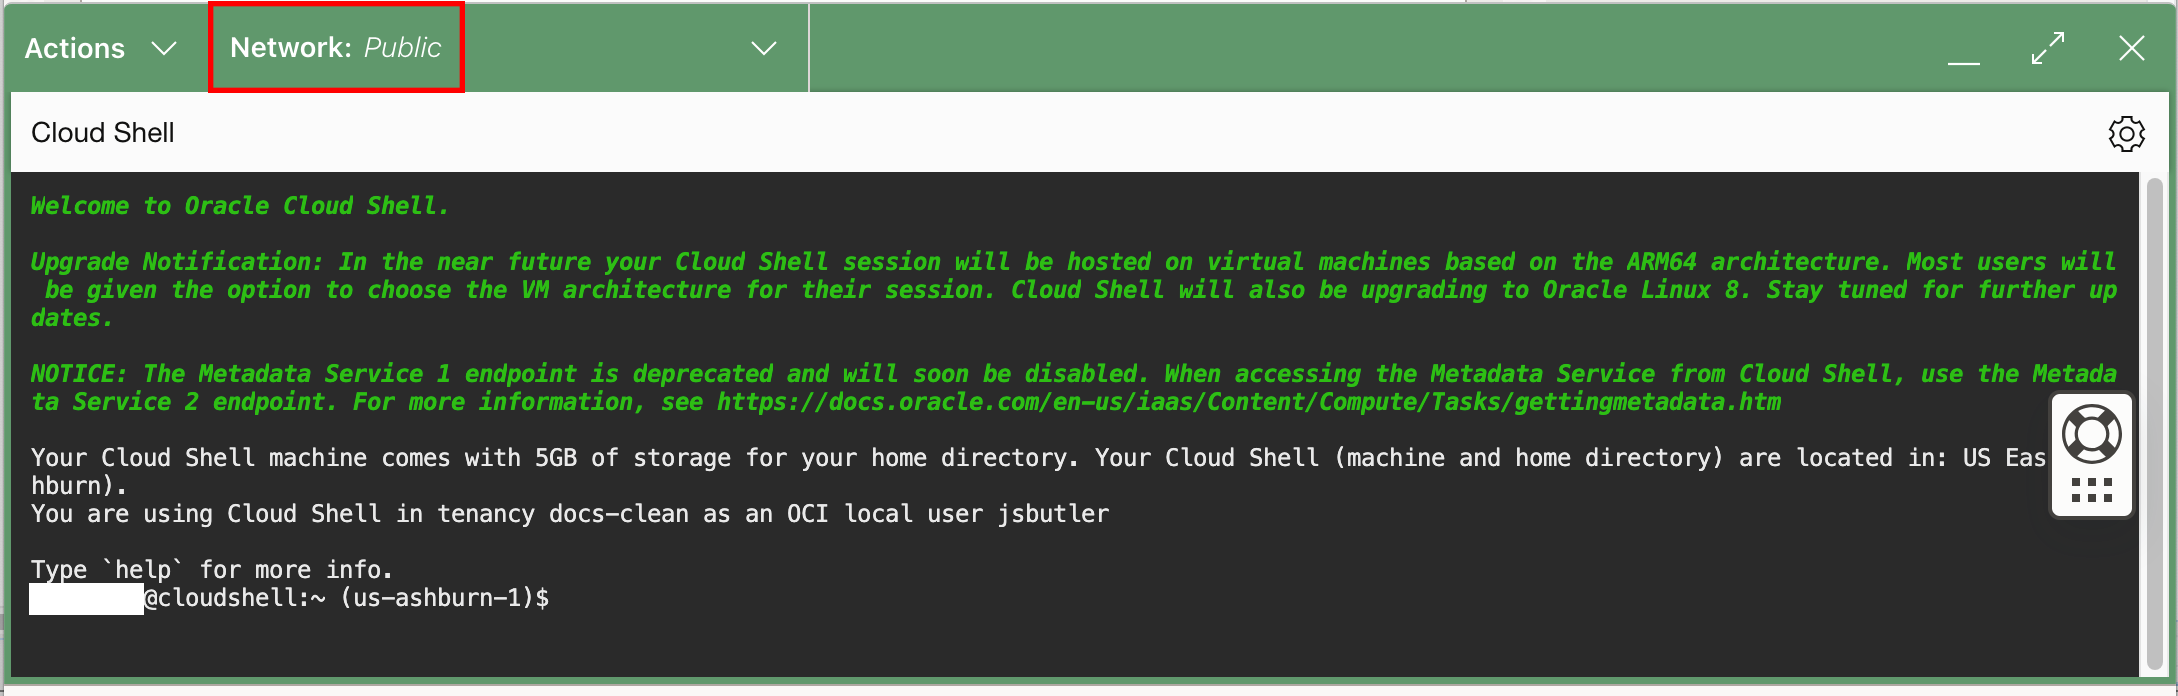 Cloud Shell Network menu location